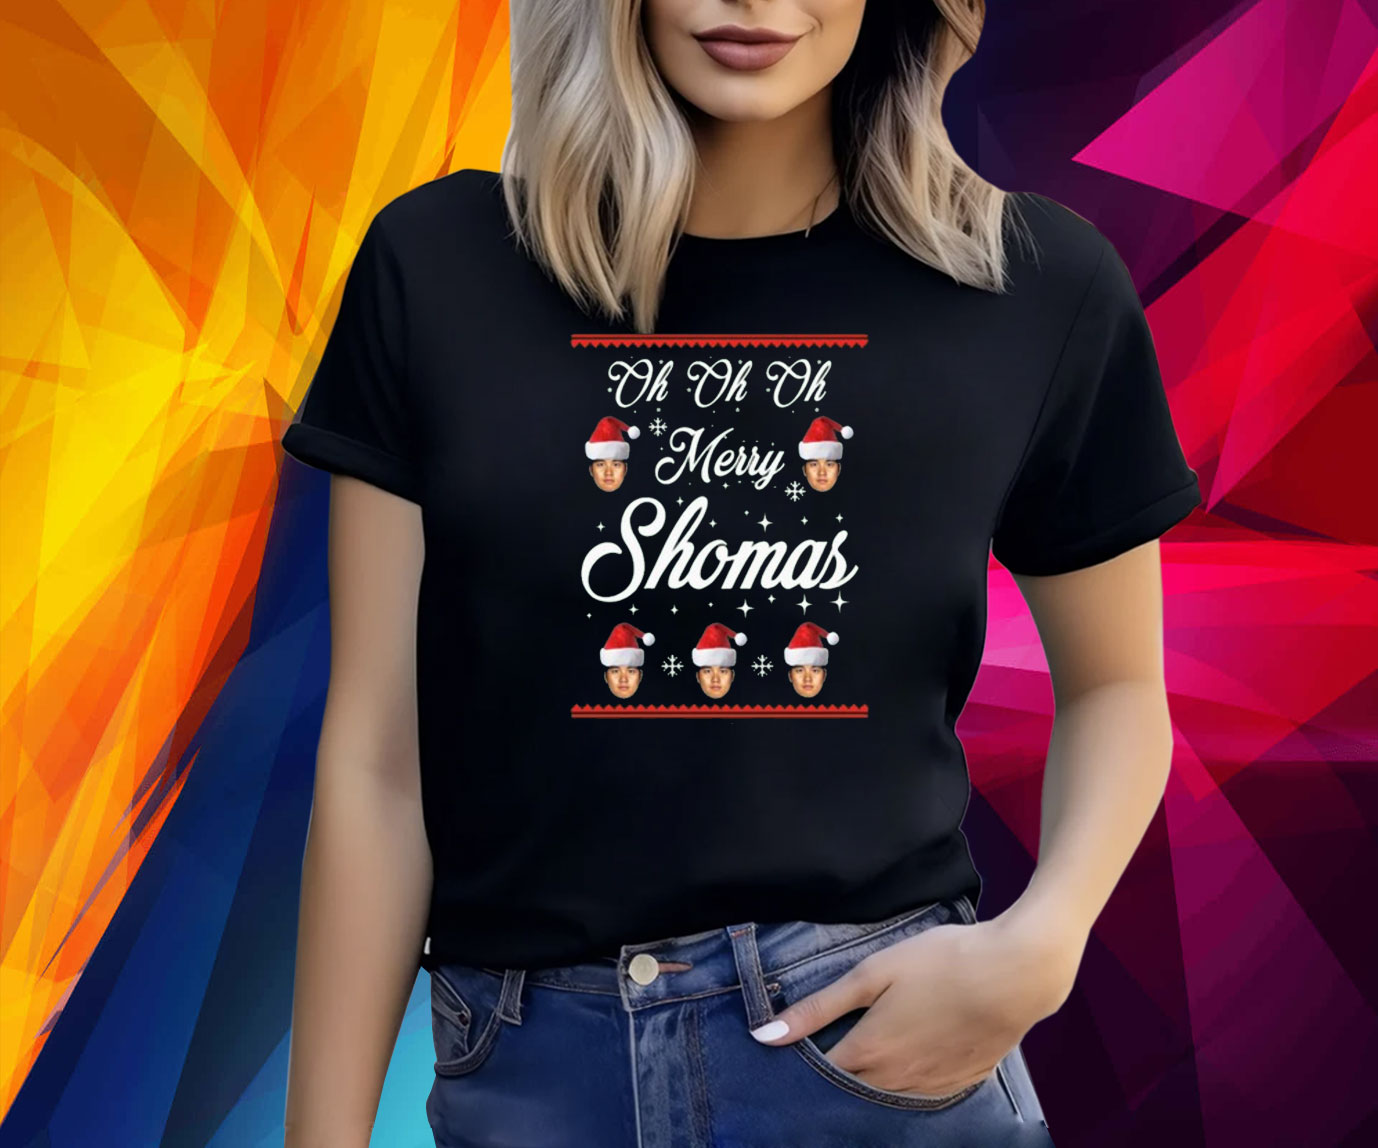 Merry Shomas Shirt